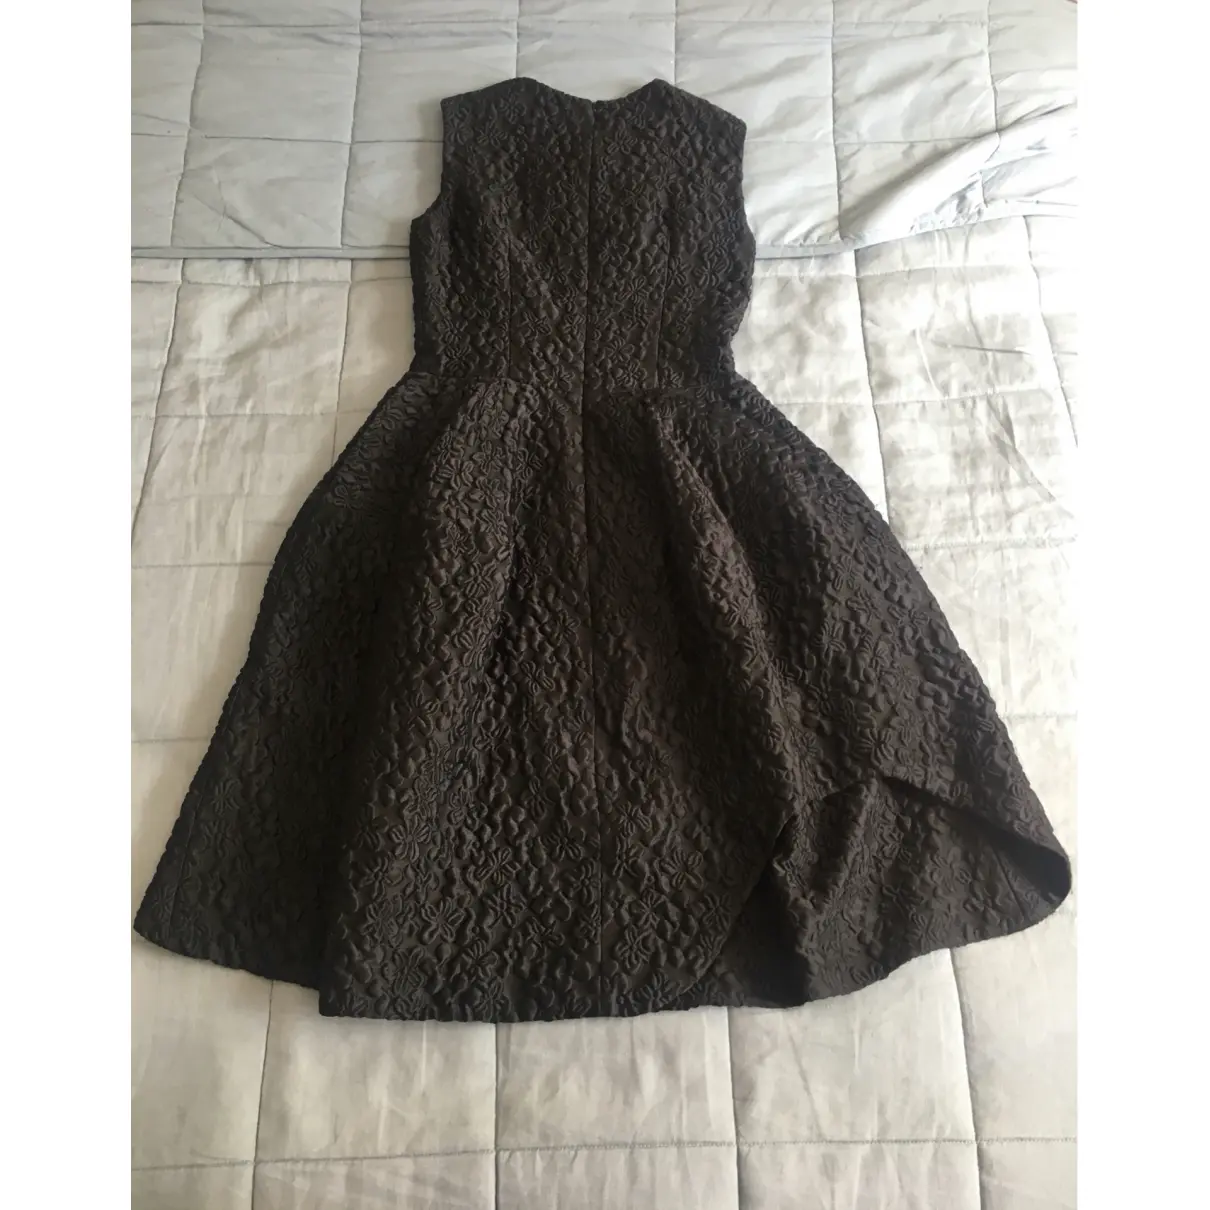 Buy Simone Rocha Mid-length dress online